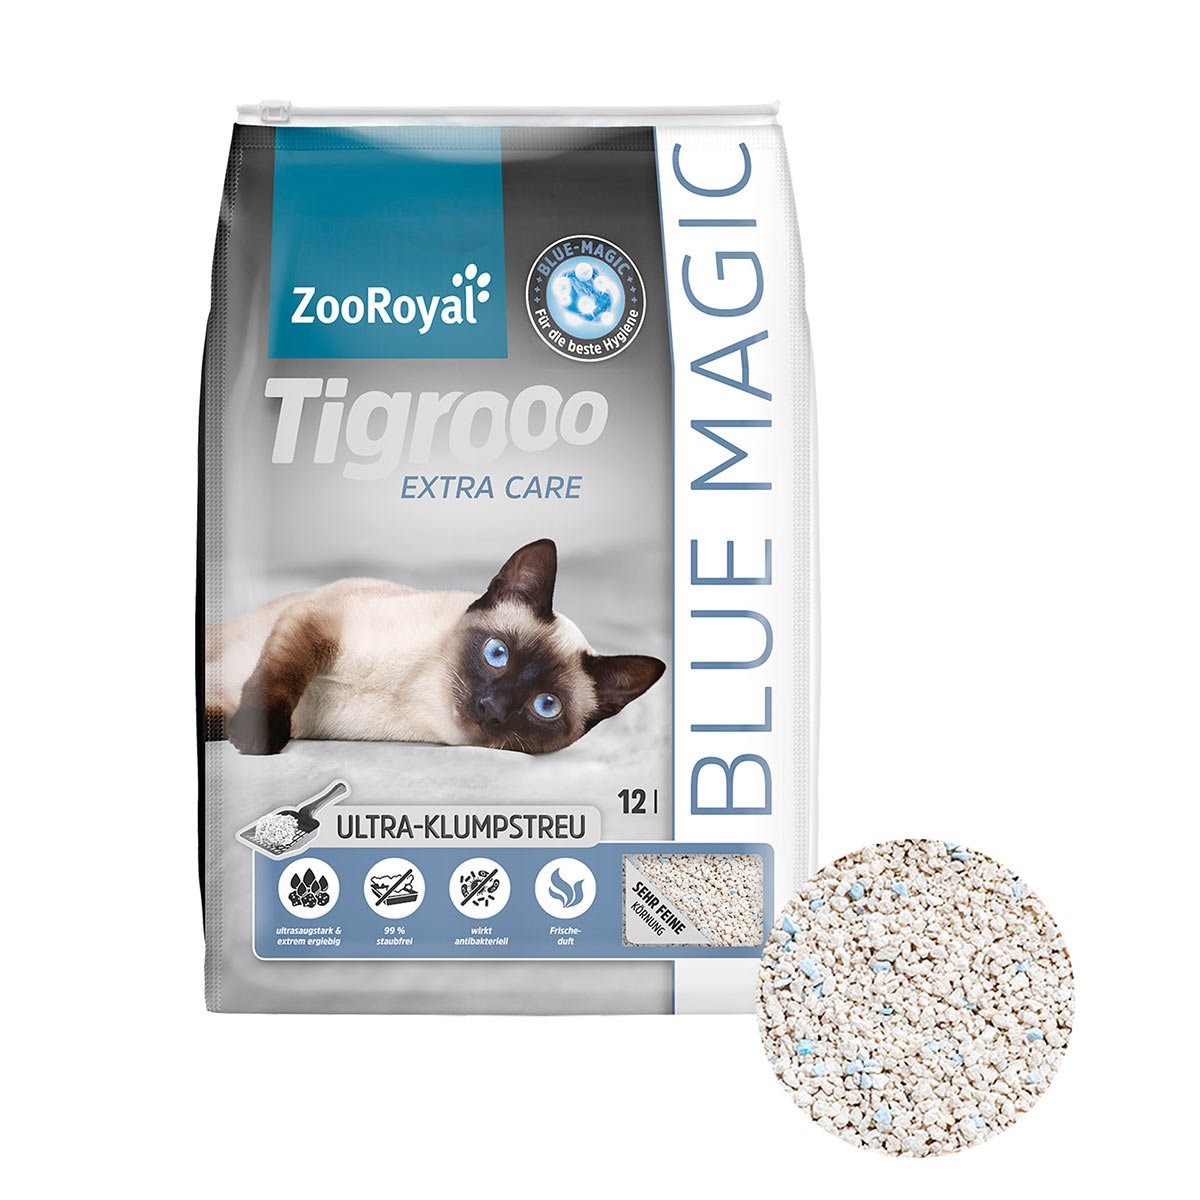 ZooRoyal Tigrooo Blue Magic 2 x 12 l